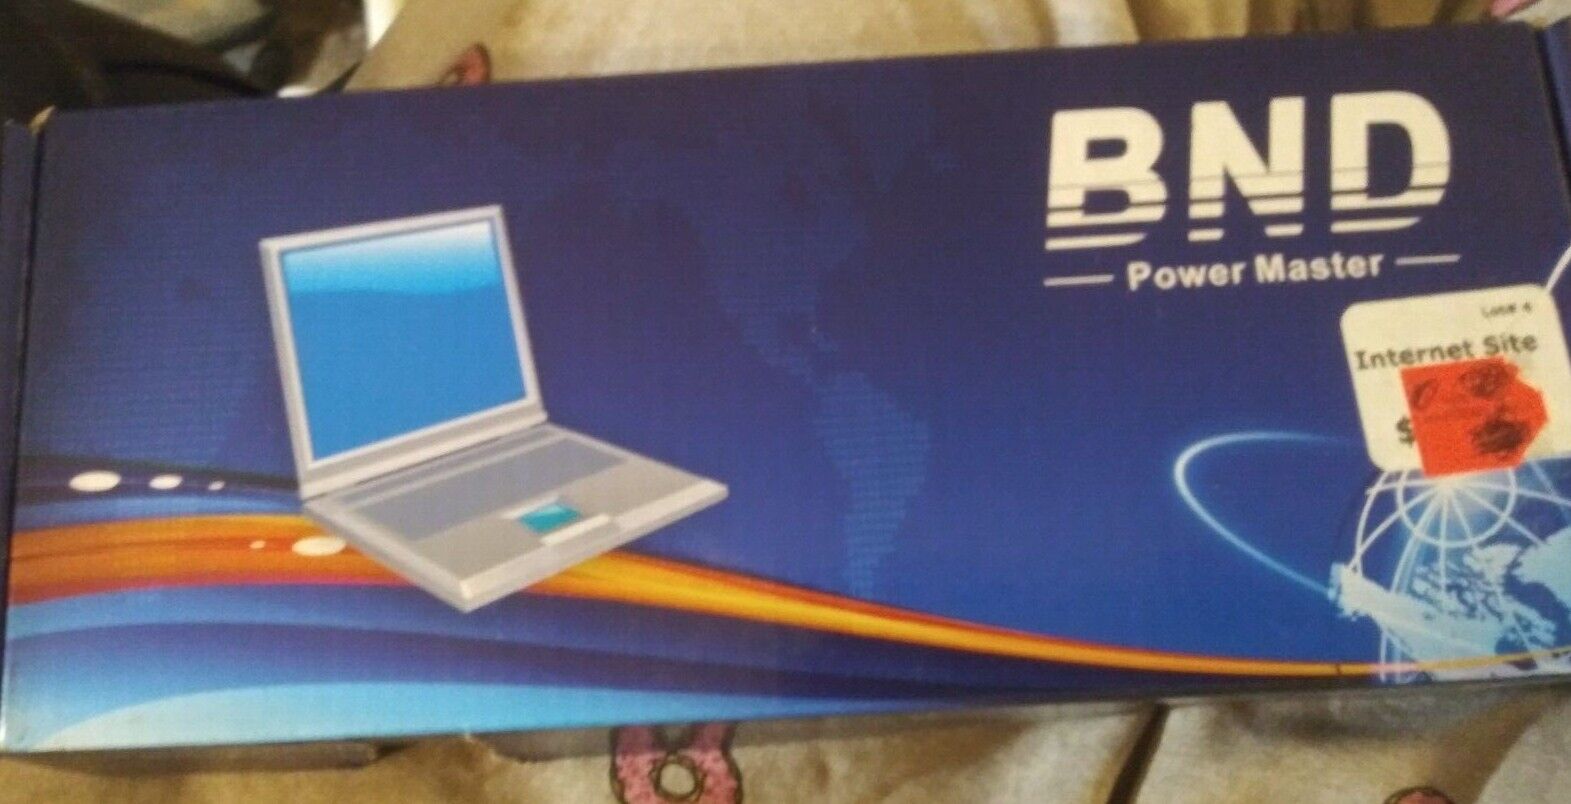 BND Power Master Laptop Battery S000841 BH540E044B01 11.1V 4400mAh